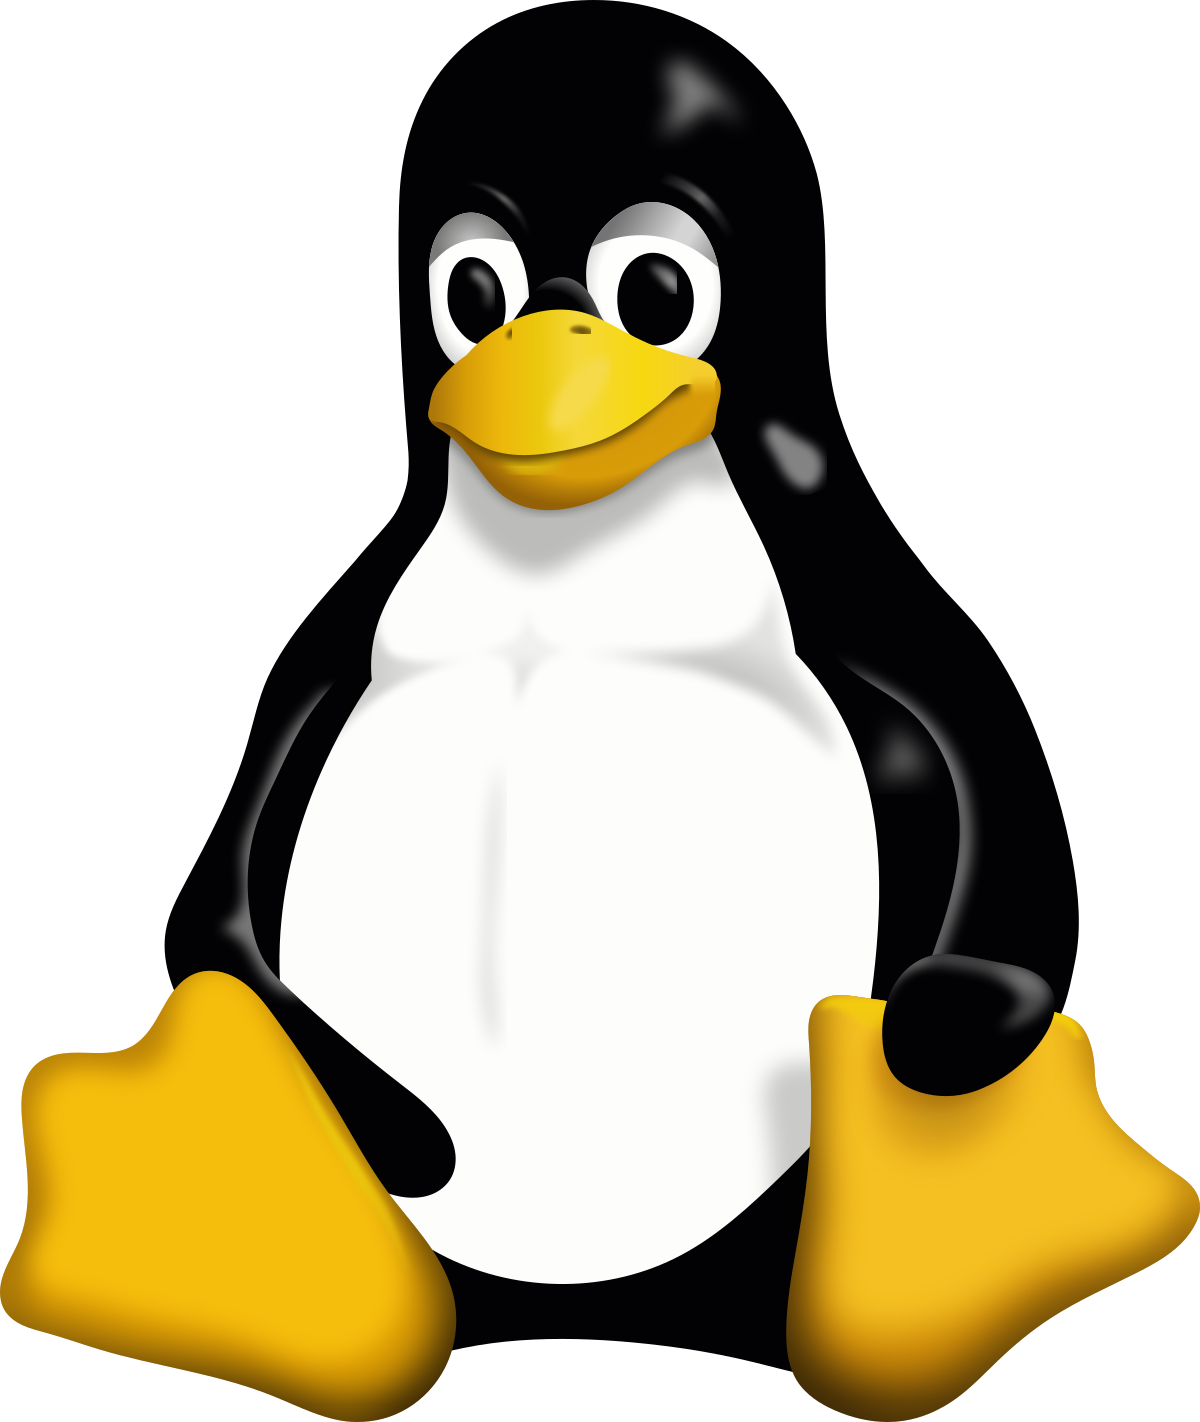 linux ( server)